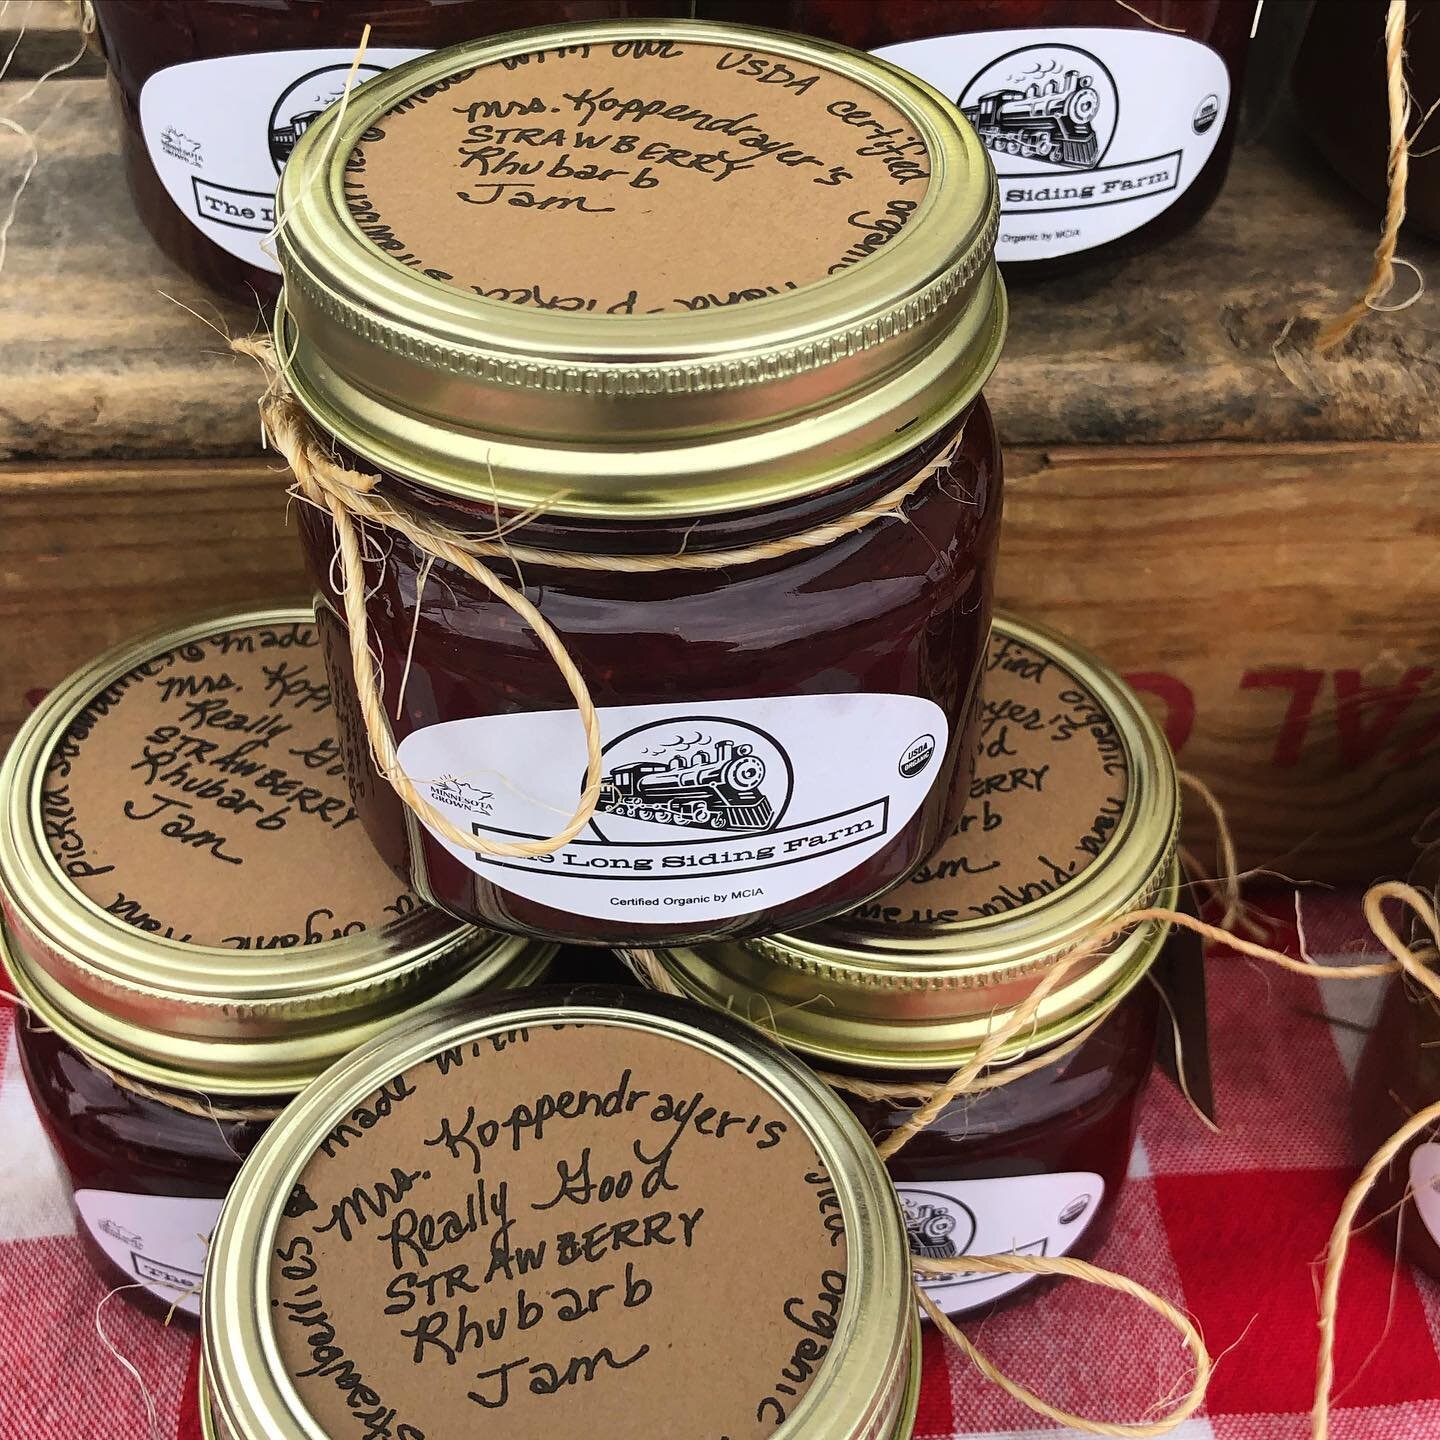 Last week at the Excelsior Farmers Market. Today we have raspberry jam in addition to strawberry, strawberry rhubarb, and rhubarb. All our jam is USDA certified organic.  @excelsiorfarmersmarket 

#usdaorganic #mngrown #organic #jam #raspberries